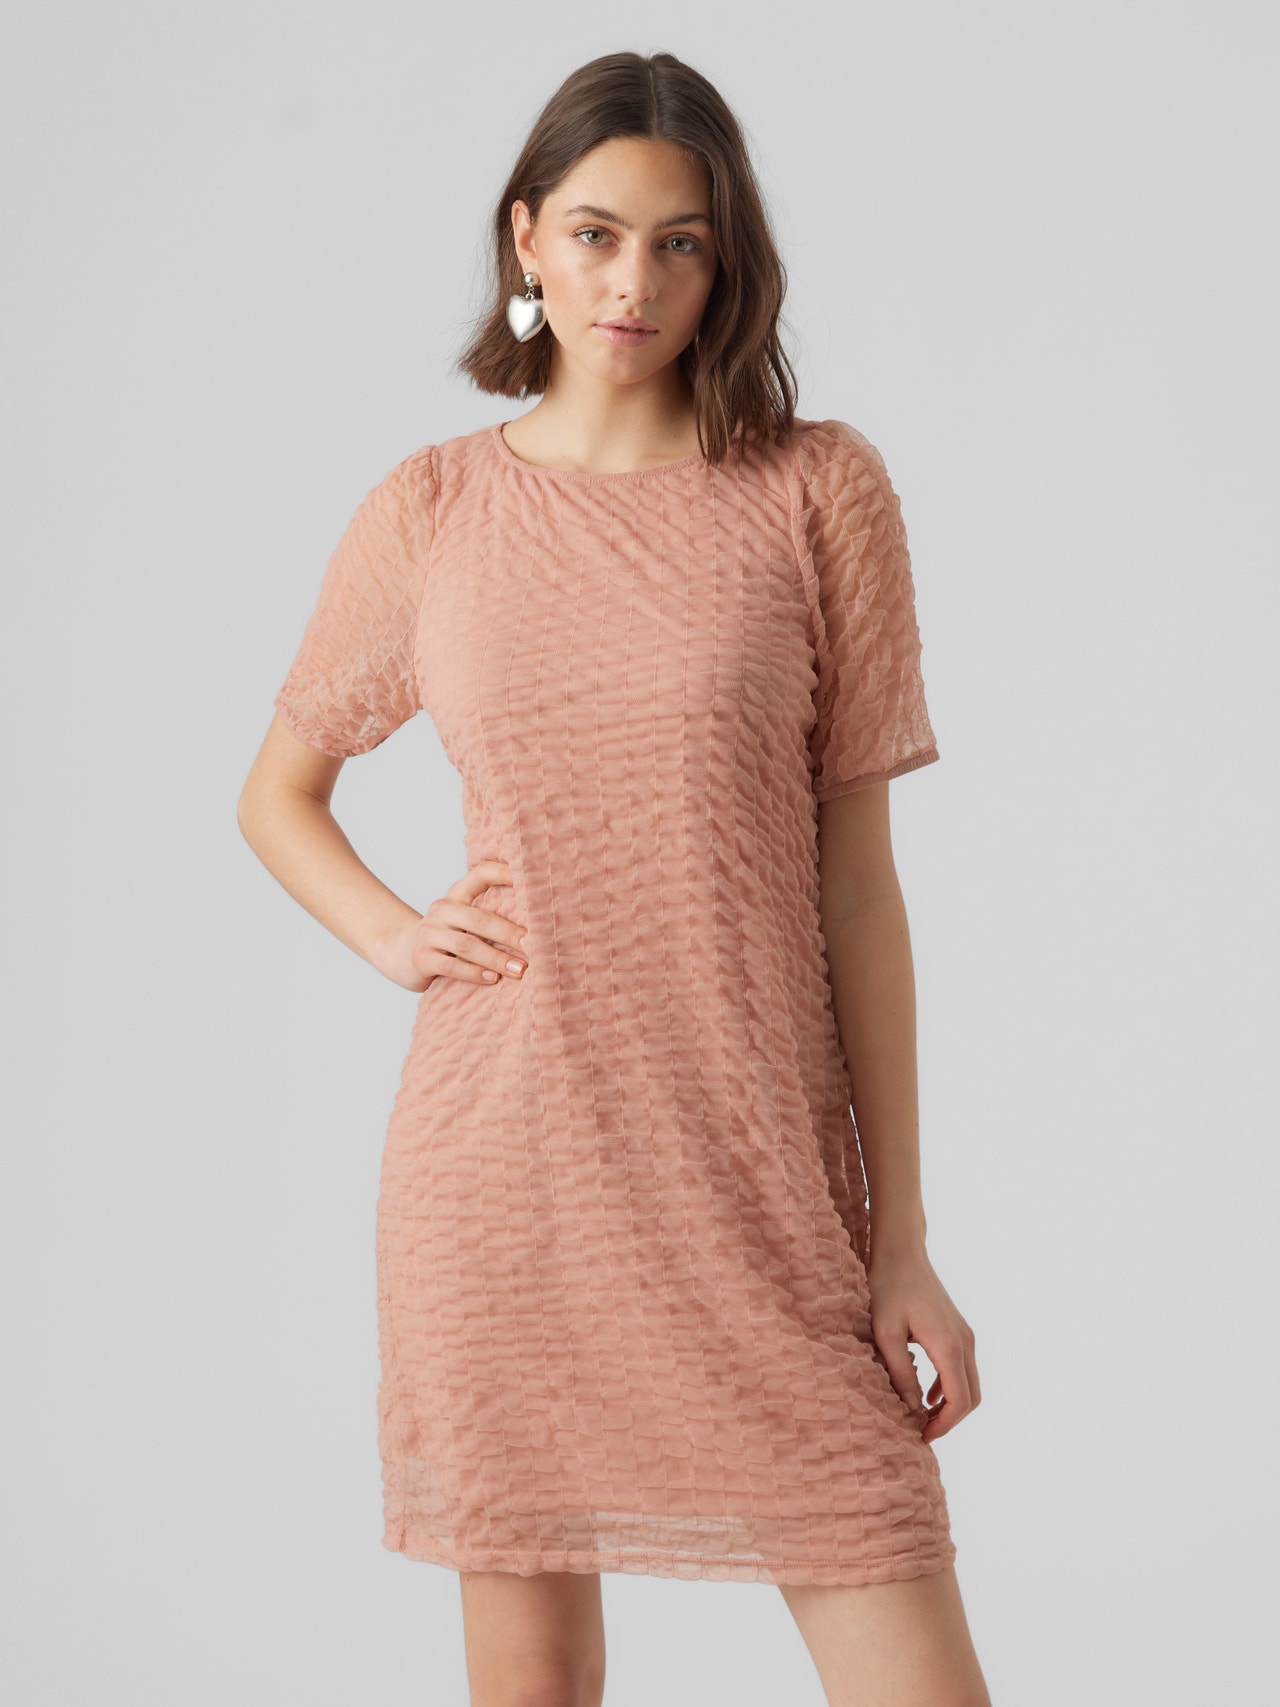 Gestaag verdrietig Vermenigvuldiging korte jurk met 40% korting! | Vero Moda®